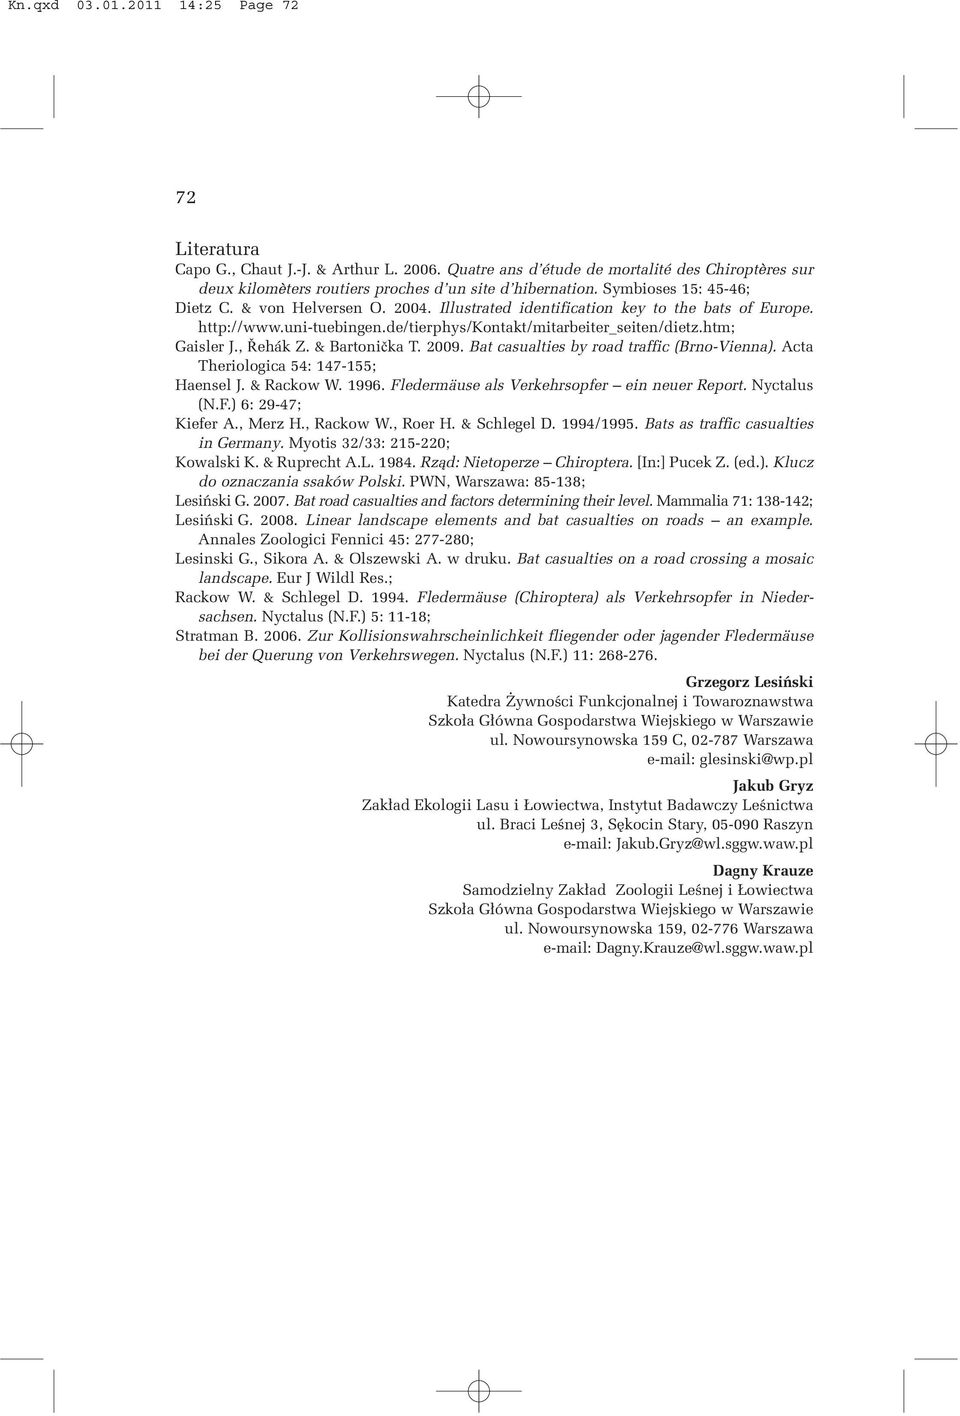 , Øehák Z. & Bartonièka T. 2009. Bat casualties by road traffic (Brno-Vienna). Acta Theriologica 54: 147-155; Haensel J. & Rackow W. 1996. Fledermäuse als Verkehrsopfer ein neuer Report. Nyctalus (N.